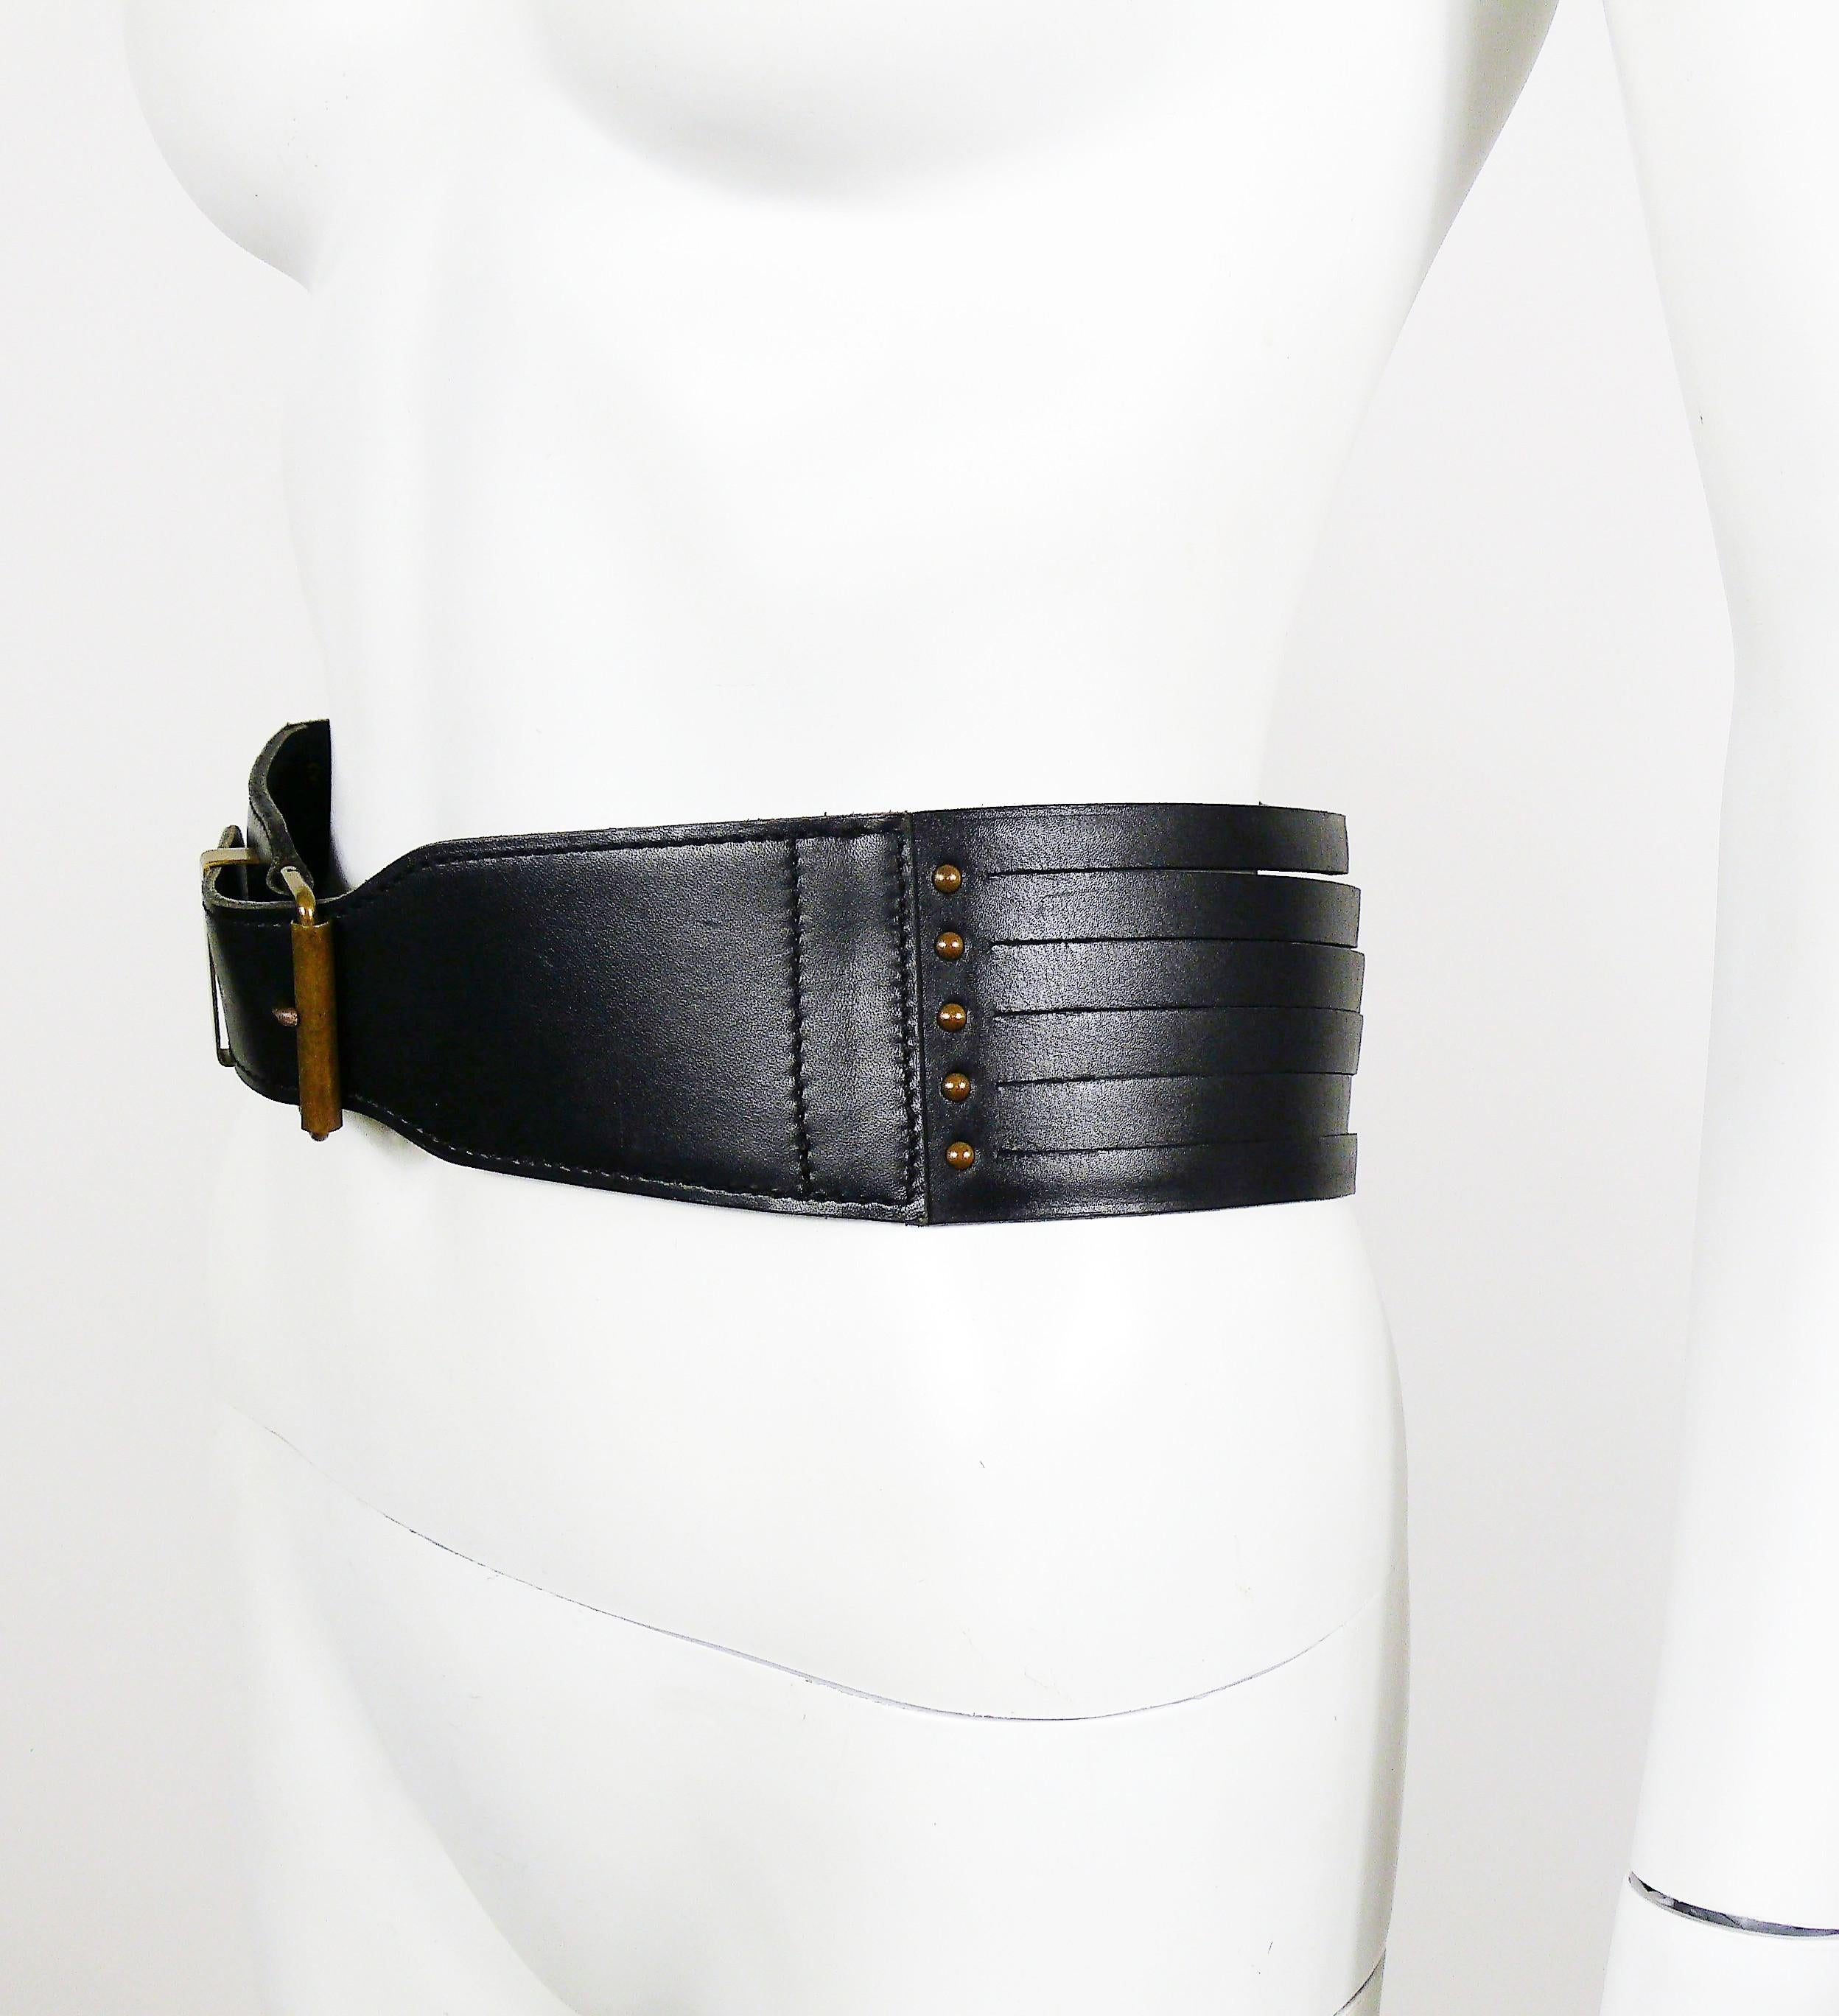 patent leather corset belt